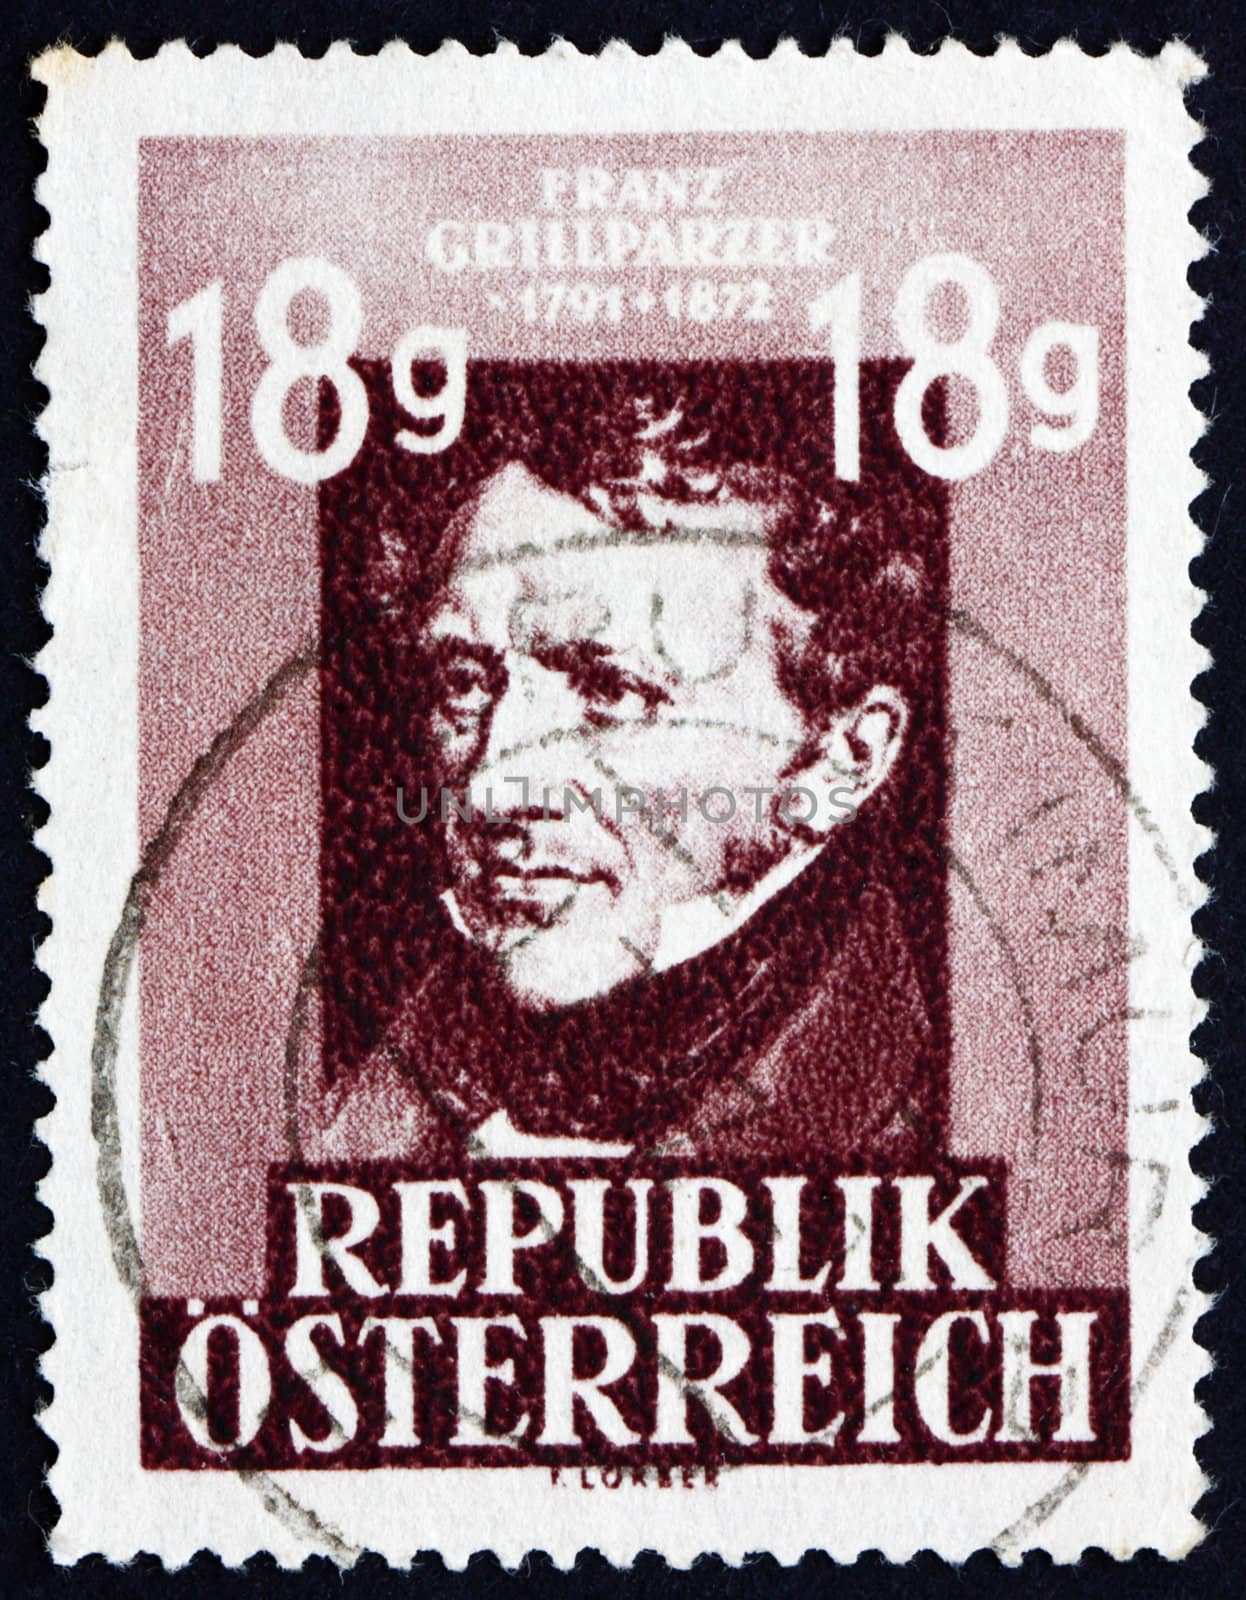 AUSTRIA - CIRCA 1947: a stamp printed in the Austria shows Franz Grillparzer, Dramatic Poet, 75th Anniversary of the Death, circa 1947